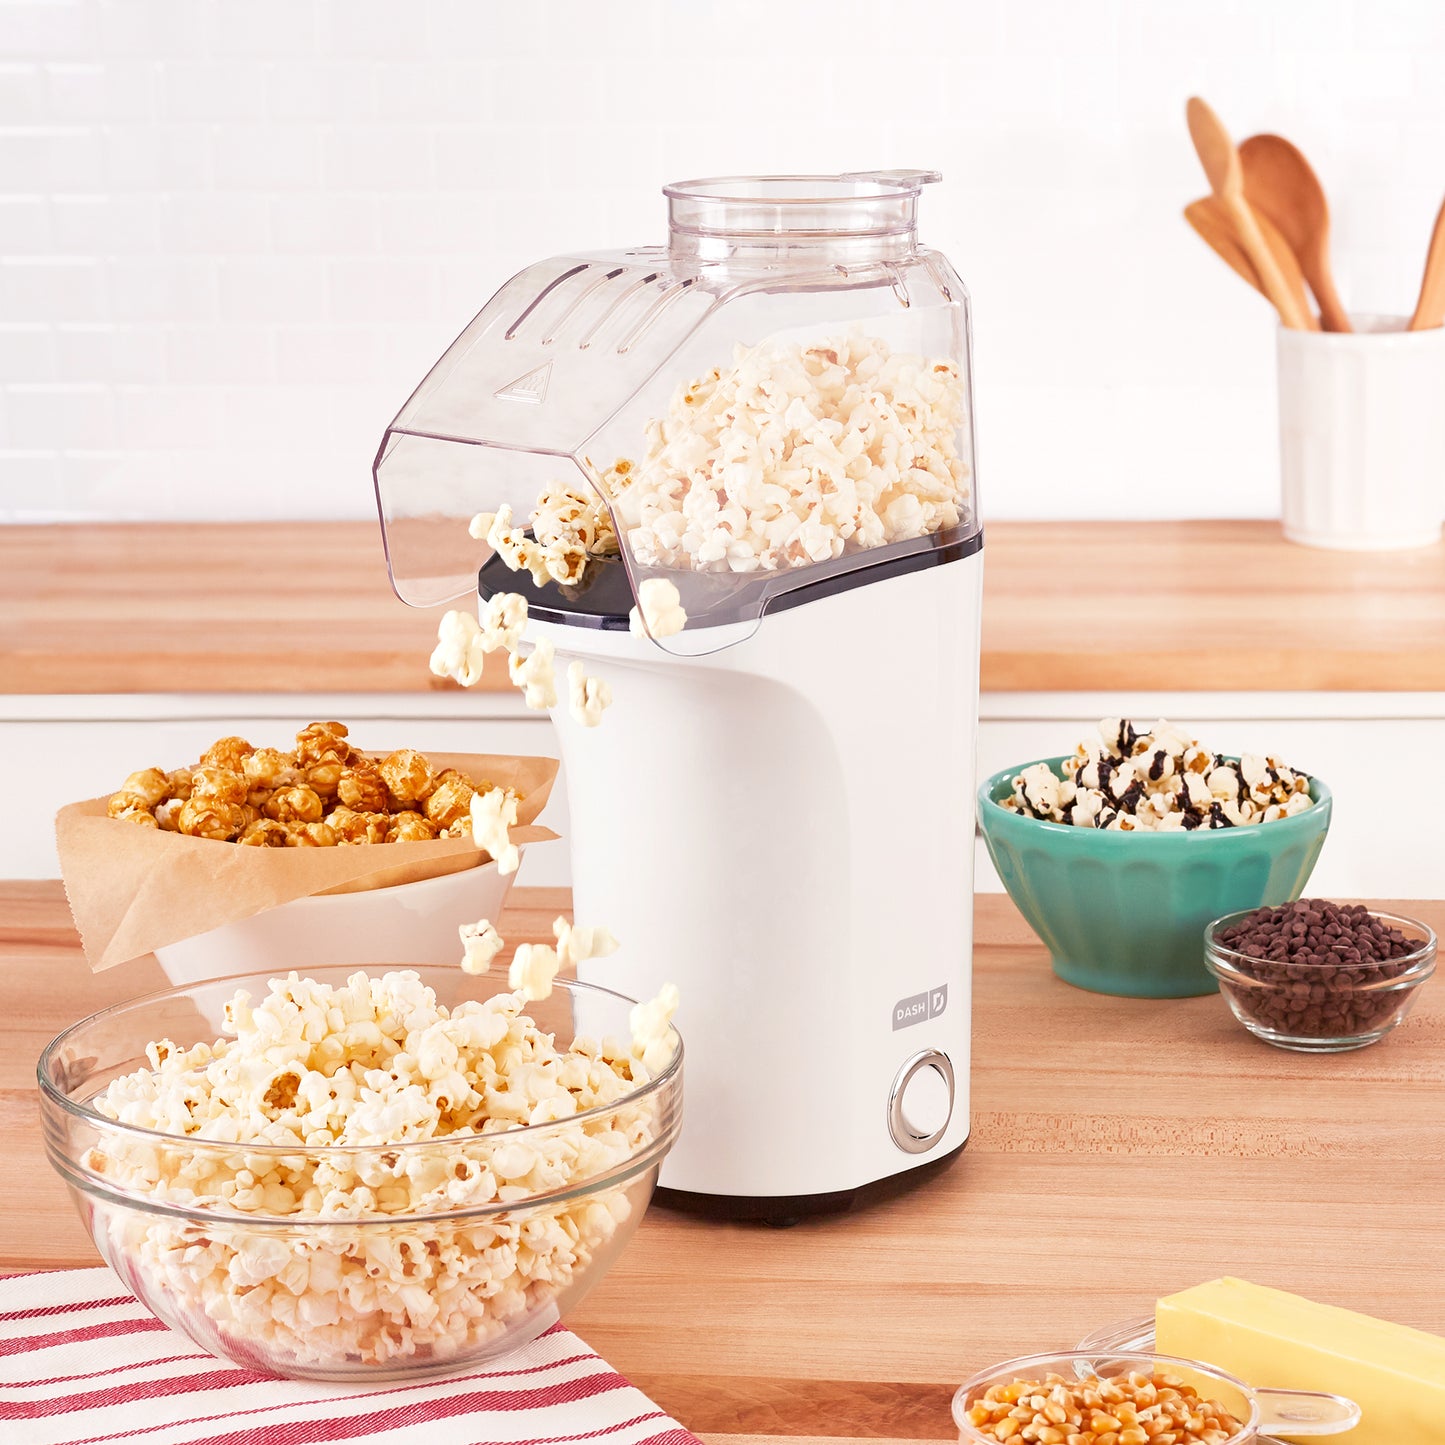 NEW Dash Fresh Pop Popcorn Maker